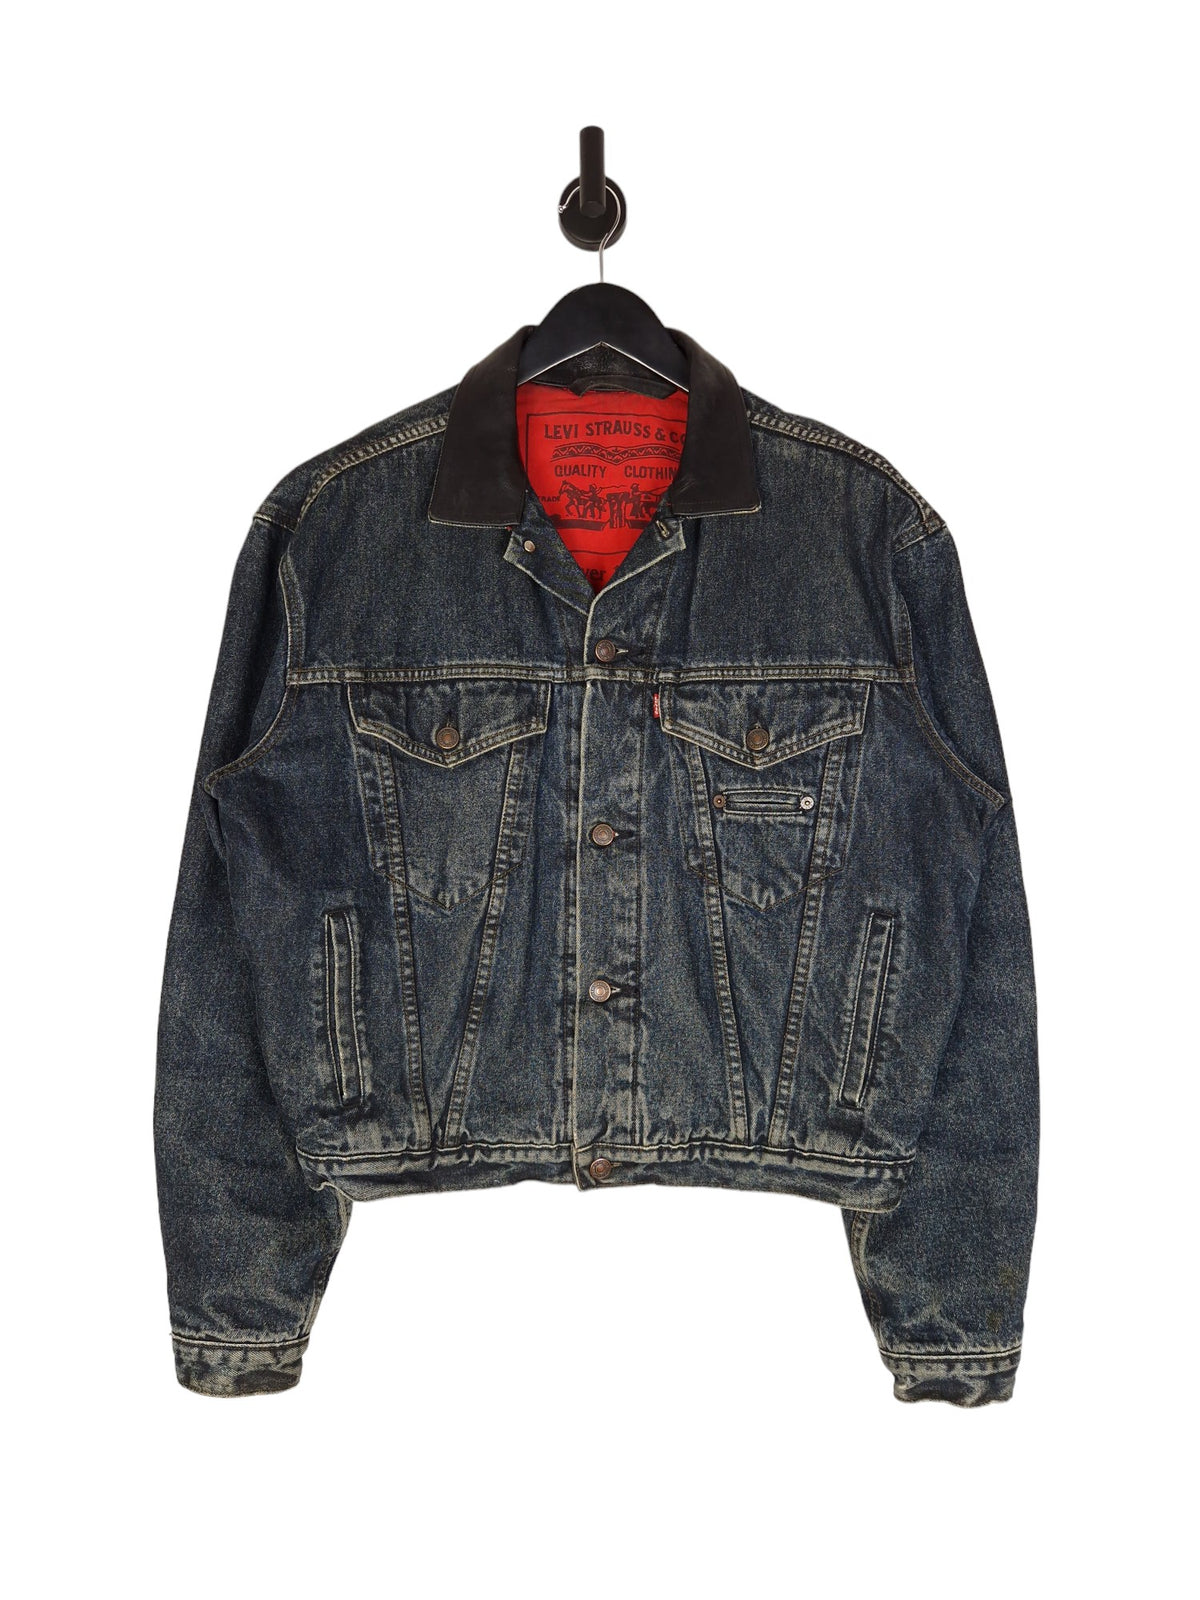 90's Levi's Denim Trucker Jacket Leather Collar - Size Large